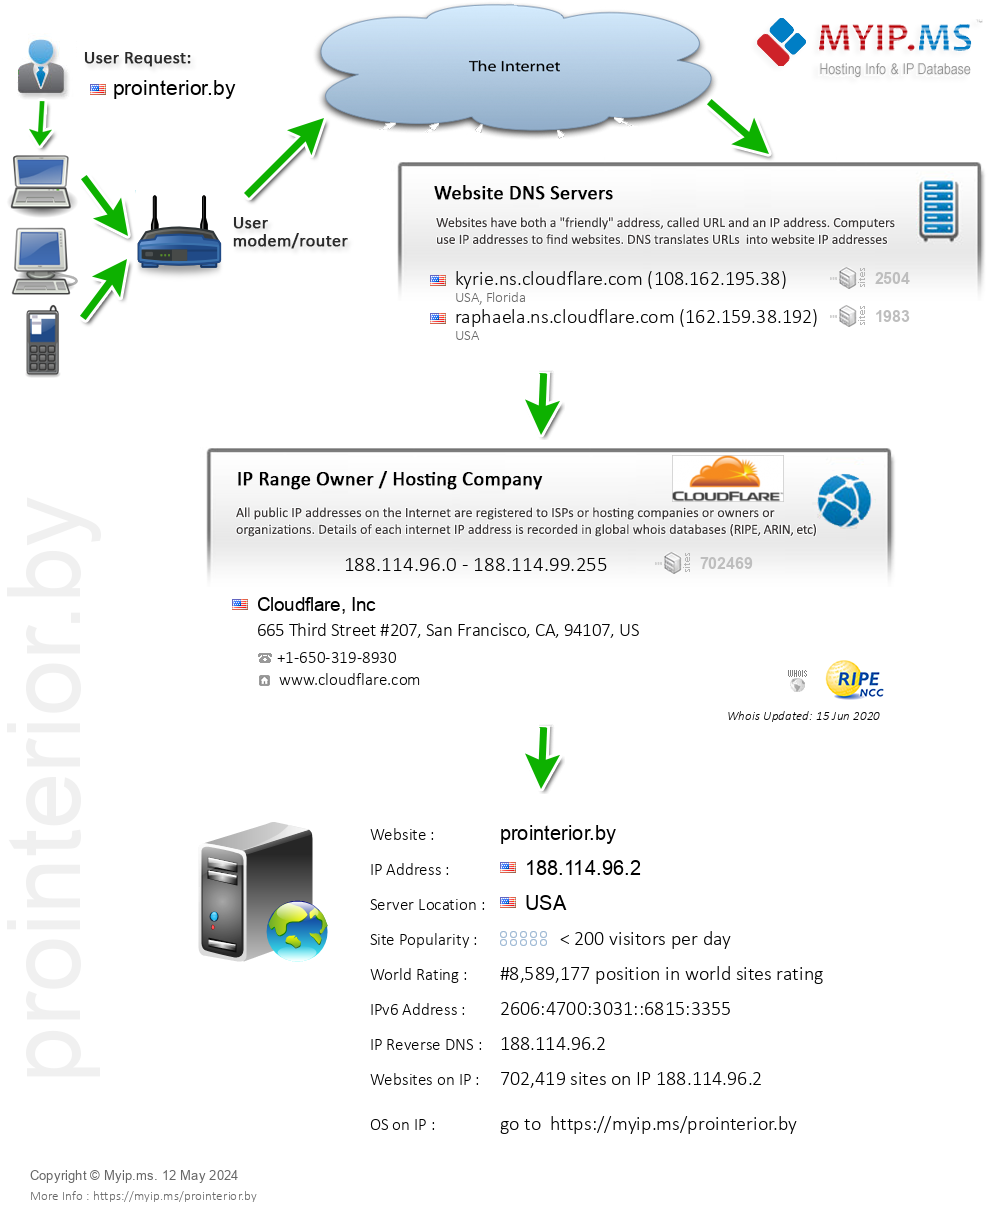 Prointerior.by - Website Hosting Visual IP Diagram